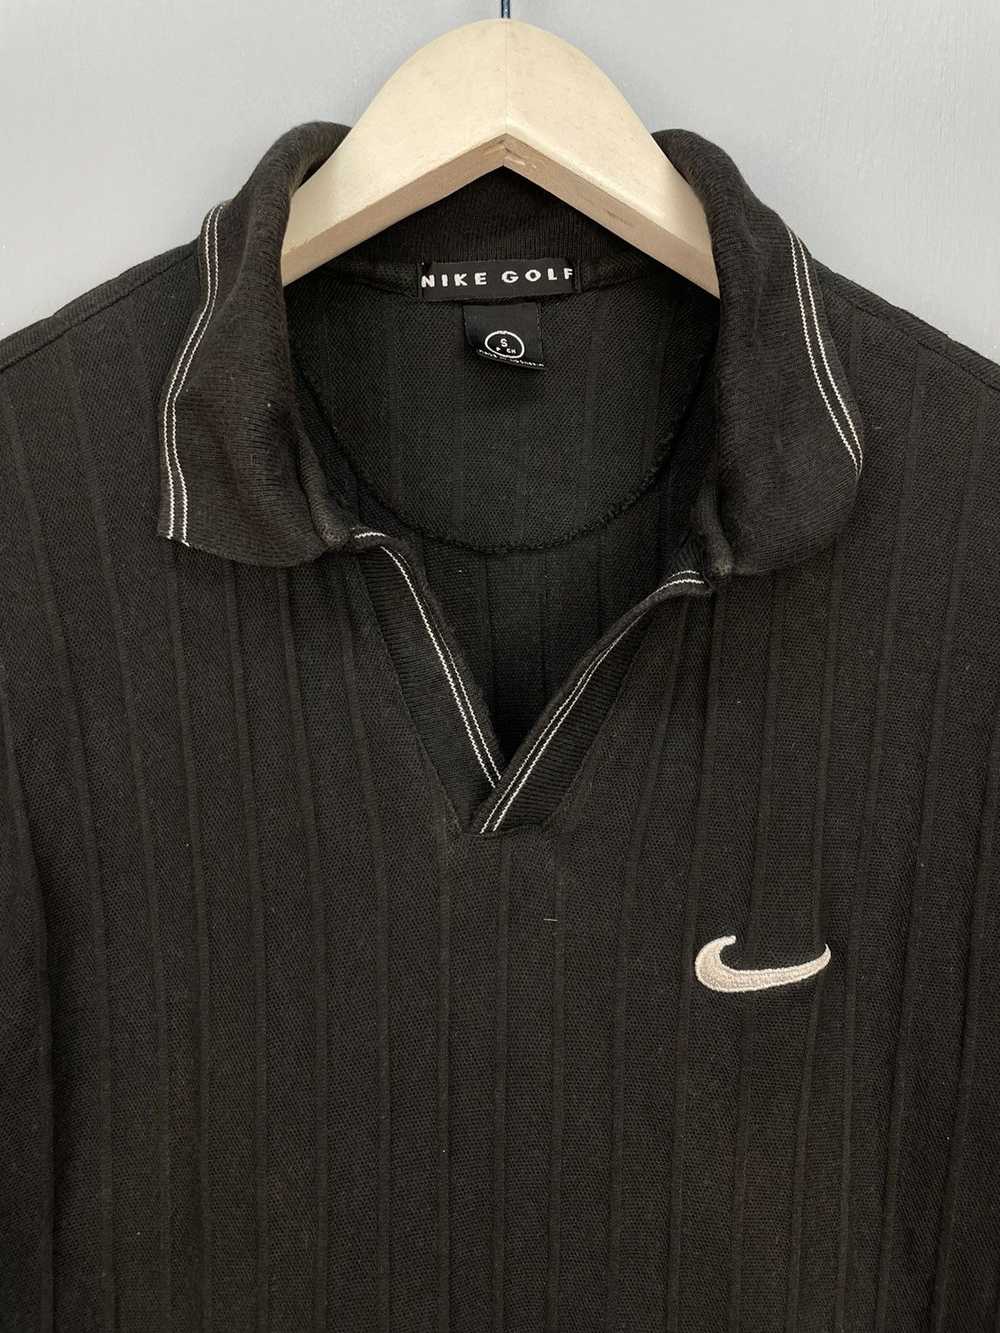 Nike × Vintage Vintage 90s Nike Golf 18 polo shirt - image 3